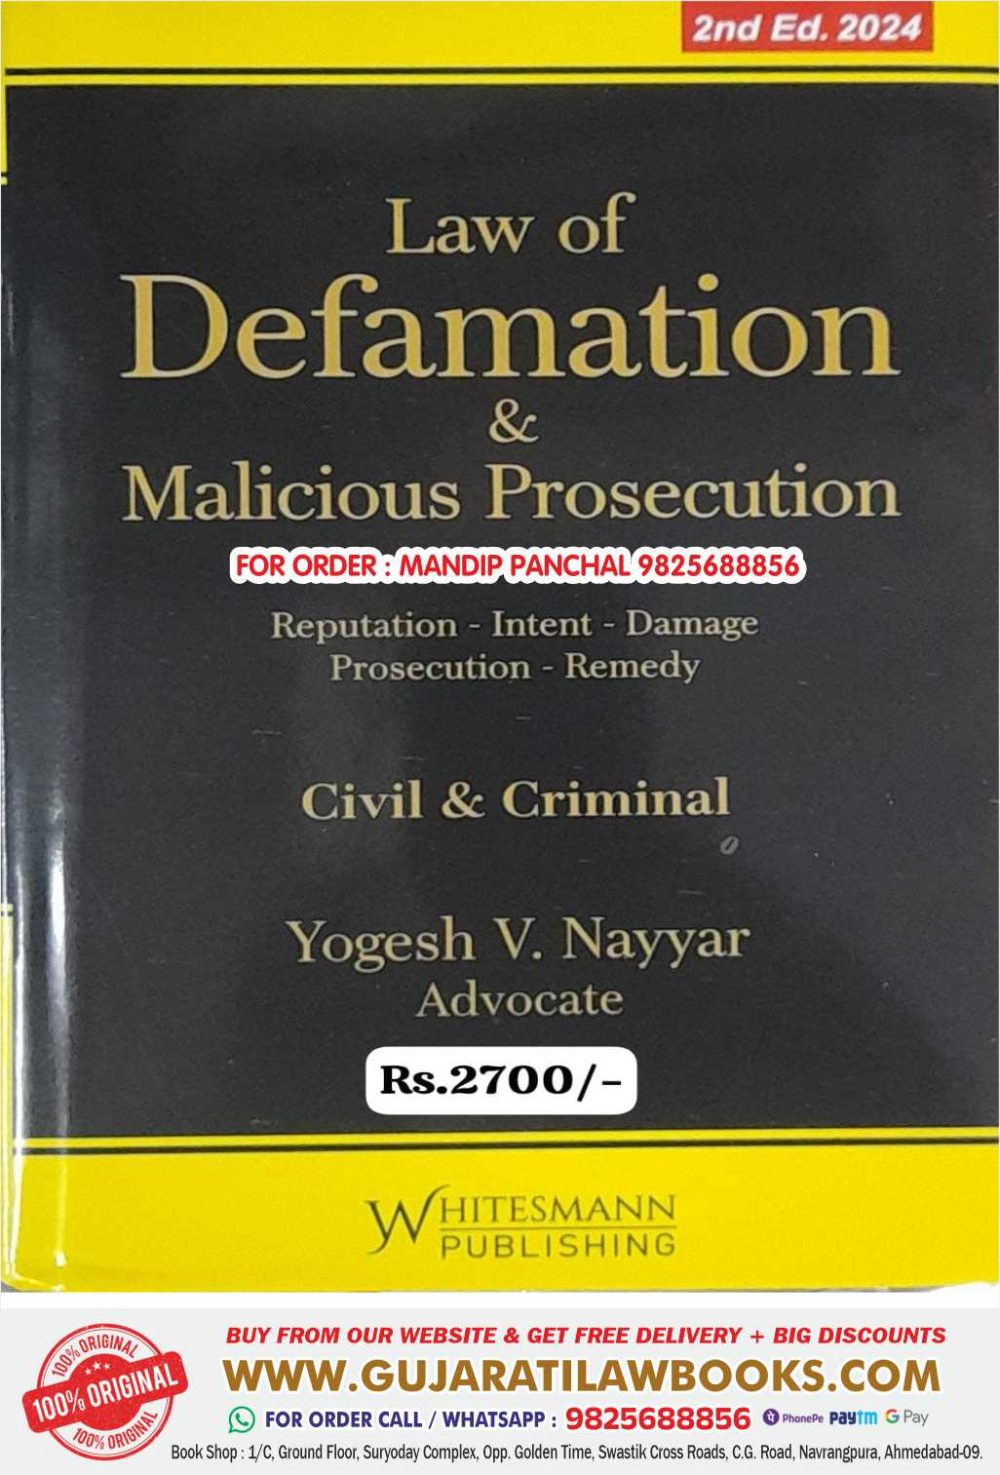 Law of Defamation and Malicious Prosecution – Civil & Criminal – Latest 2nd Edition June 2024 Whitesmann